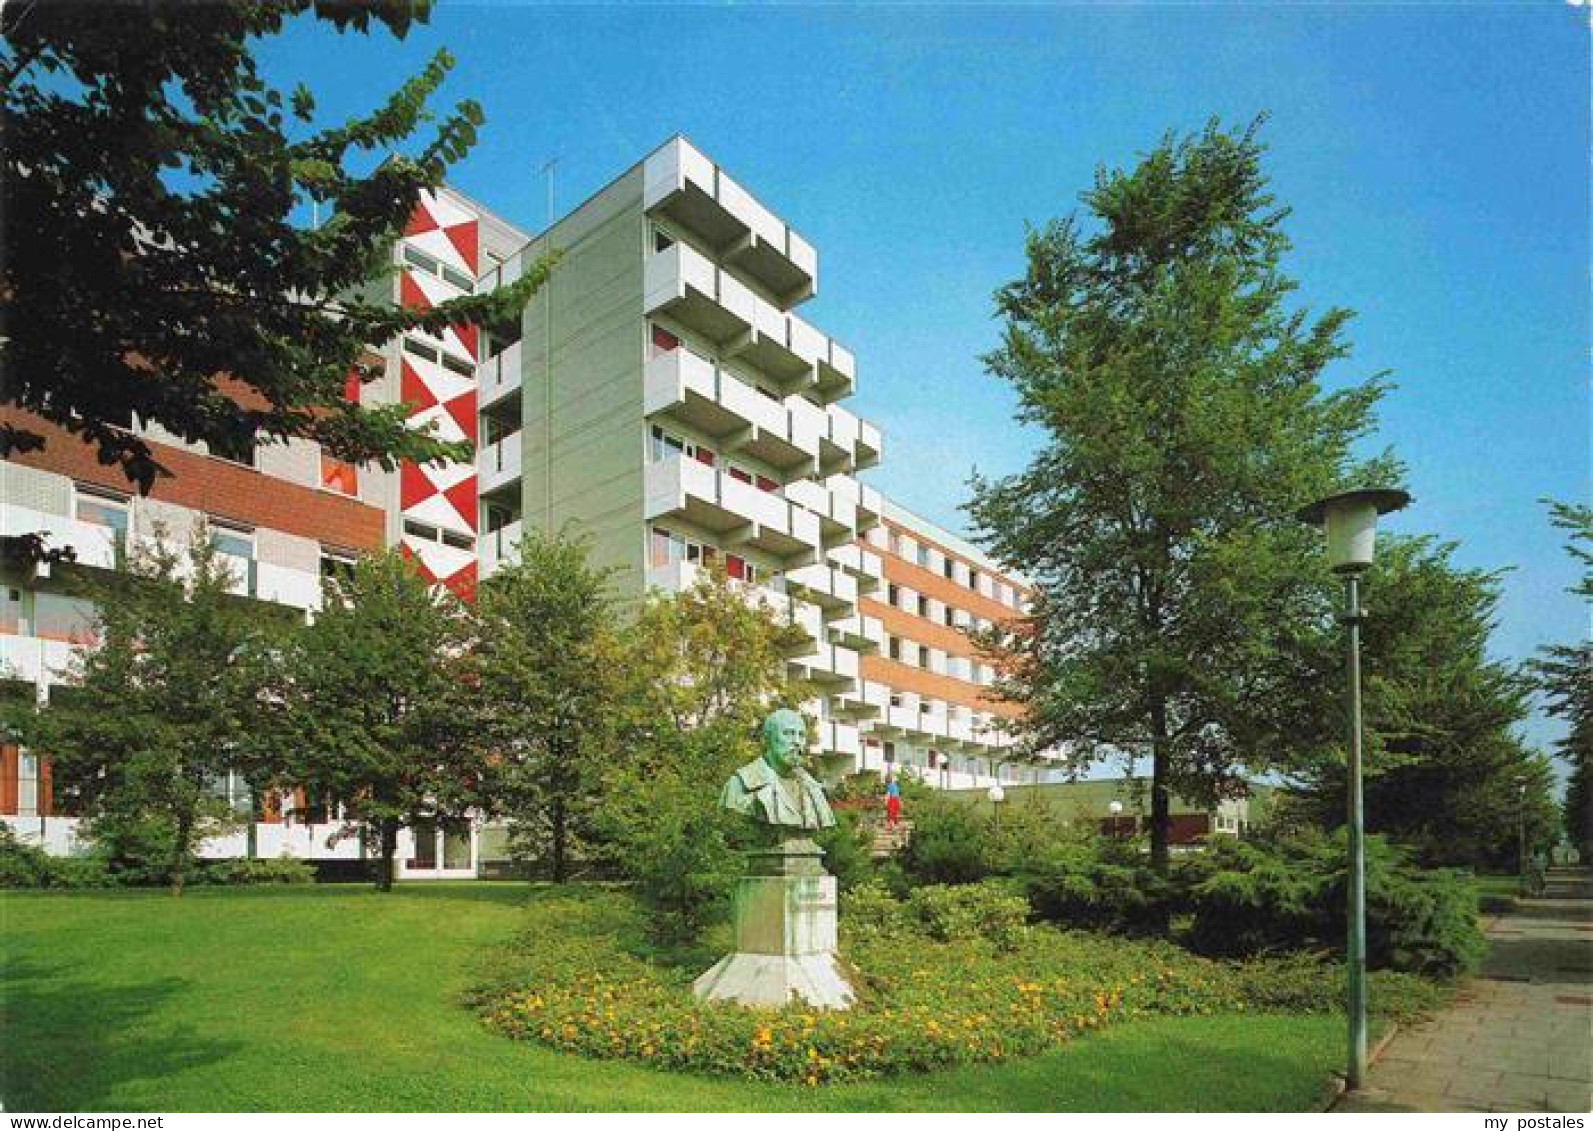 73967722 Bad_Rothenfelde Schuechtermann-Klinik Denkmal - Bad Rothenfelde